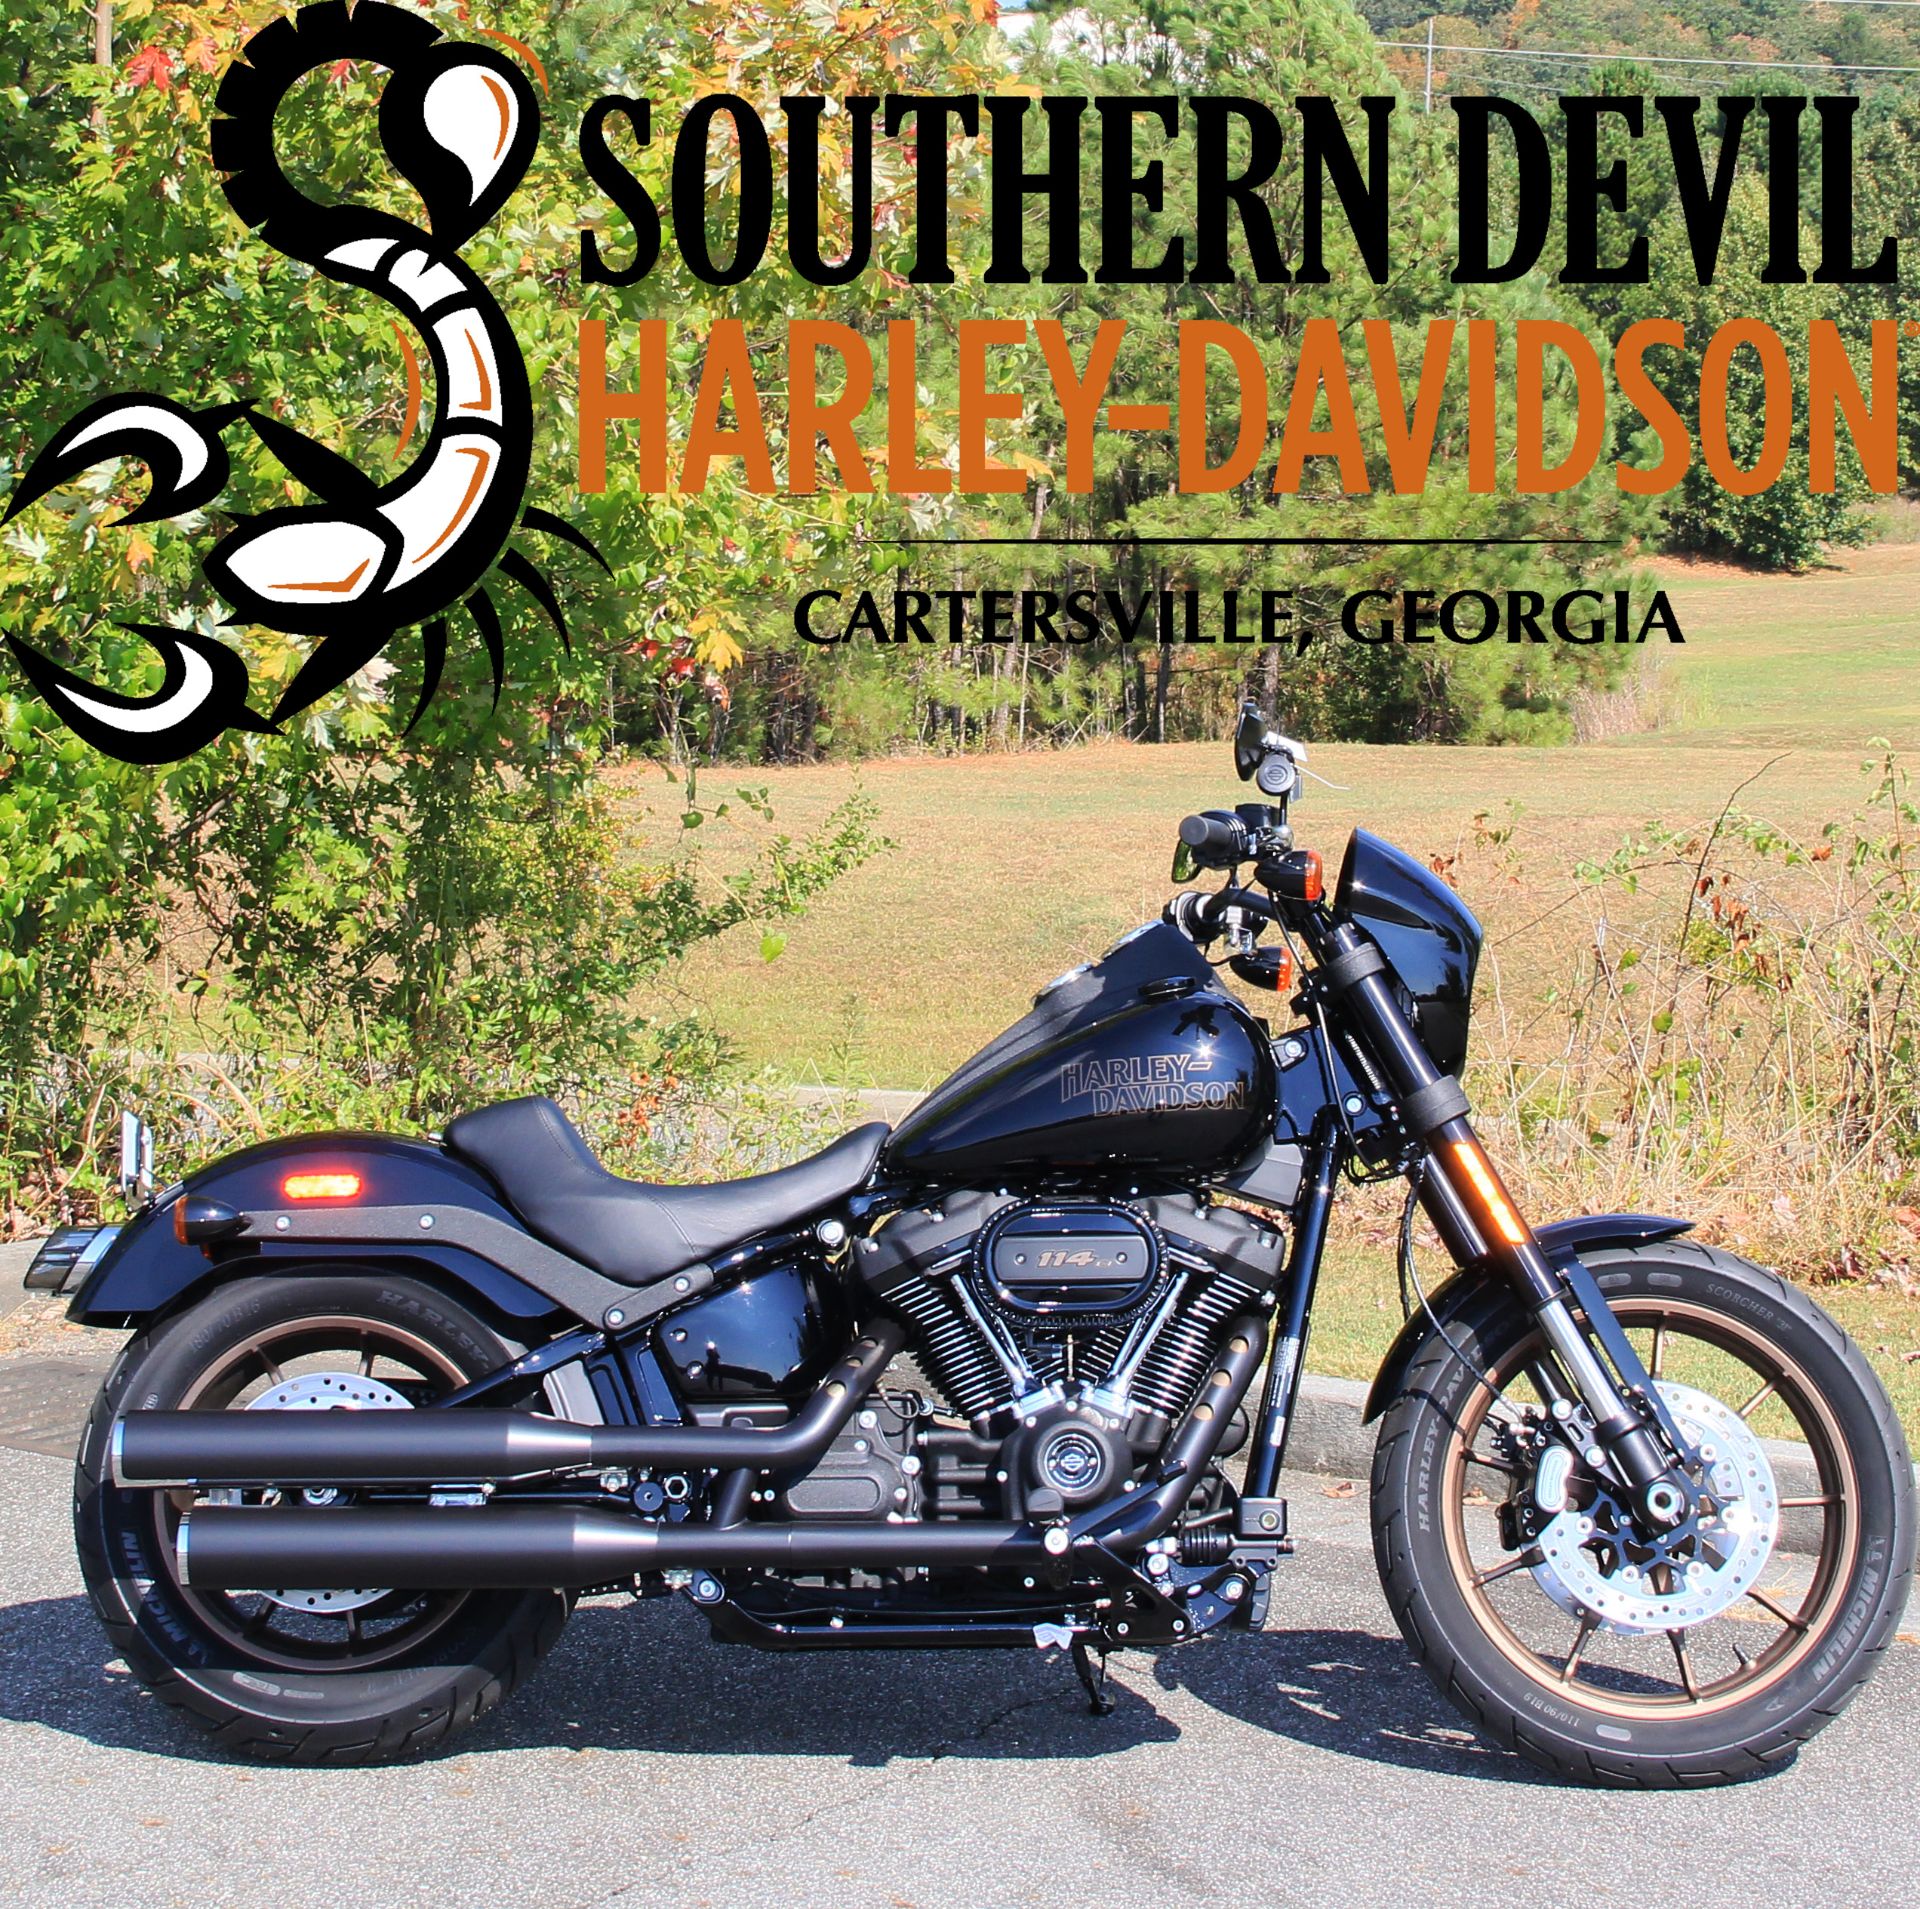 2021 Harley Davidson Low Rider S For Sale New Vivid Black Motorcycles In Cartersville Ga Southern Devil Harley Davidson 0505911